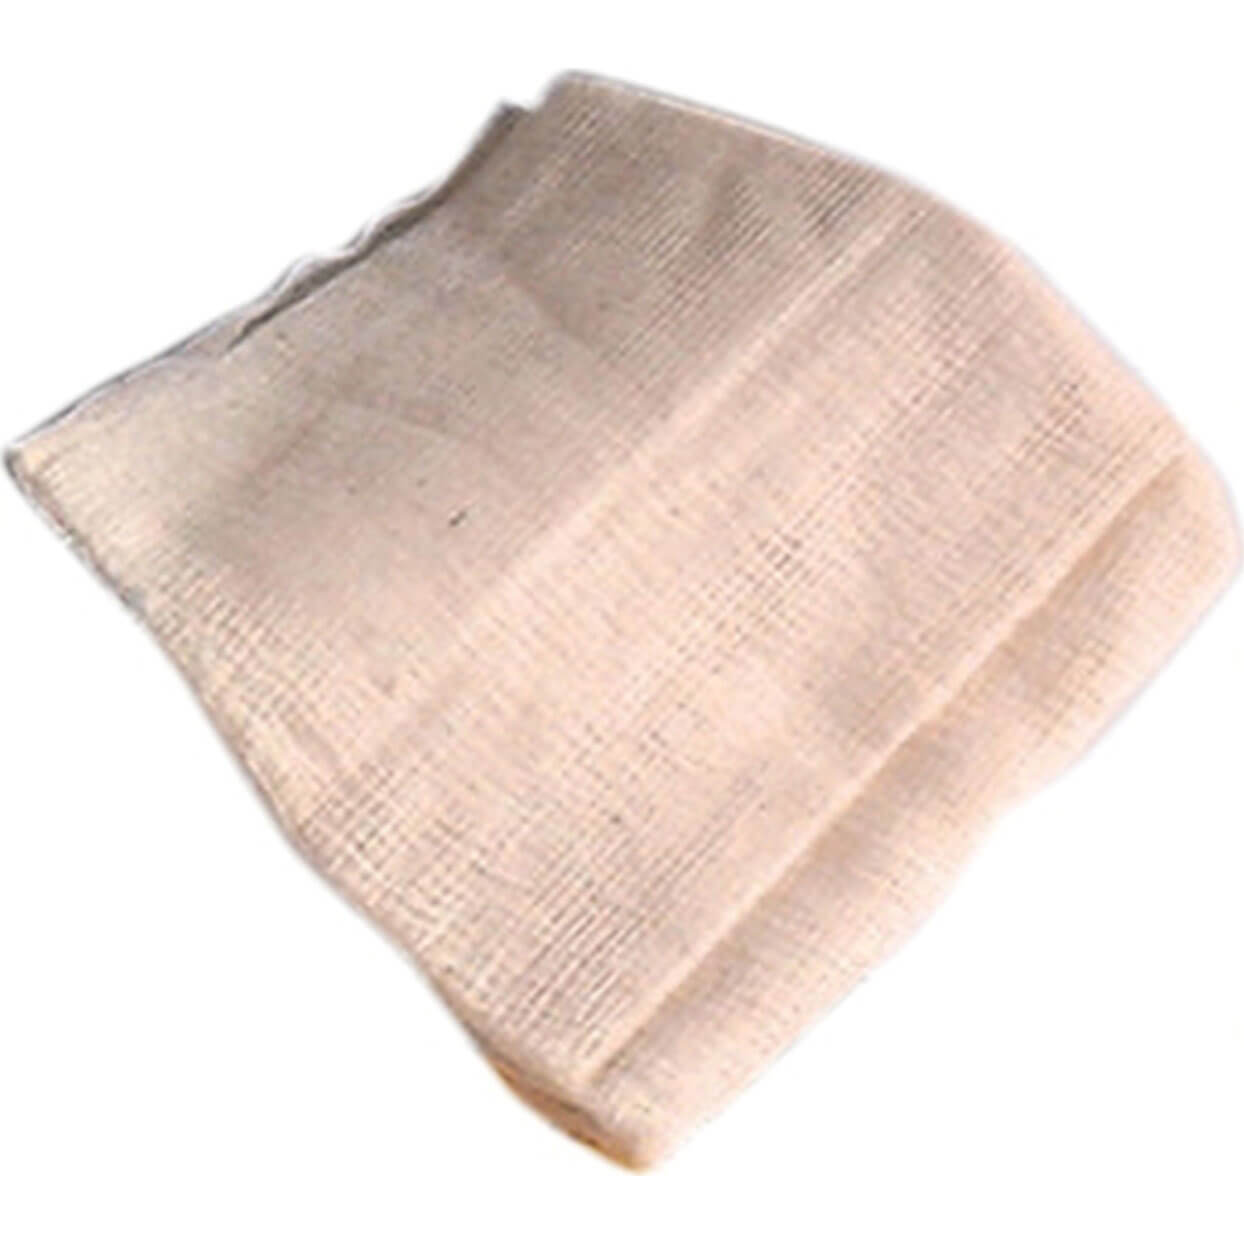 Image of Liberon Tack Cloth Pack of 3